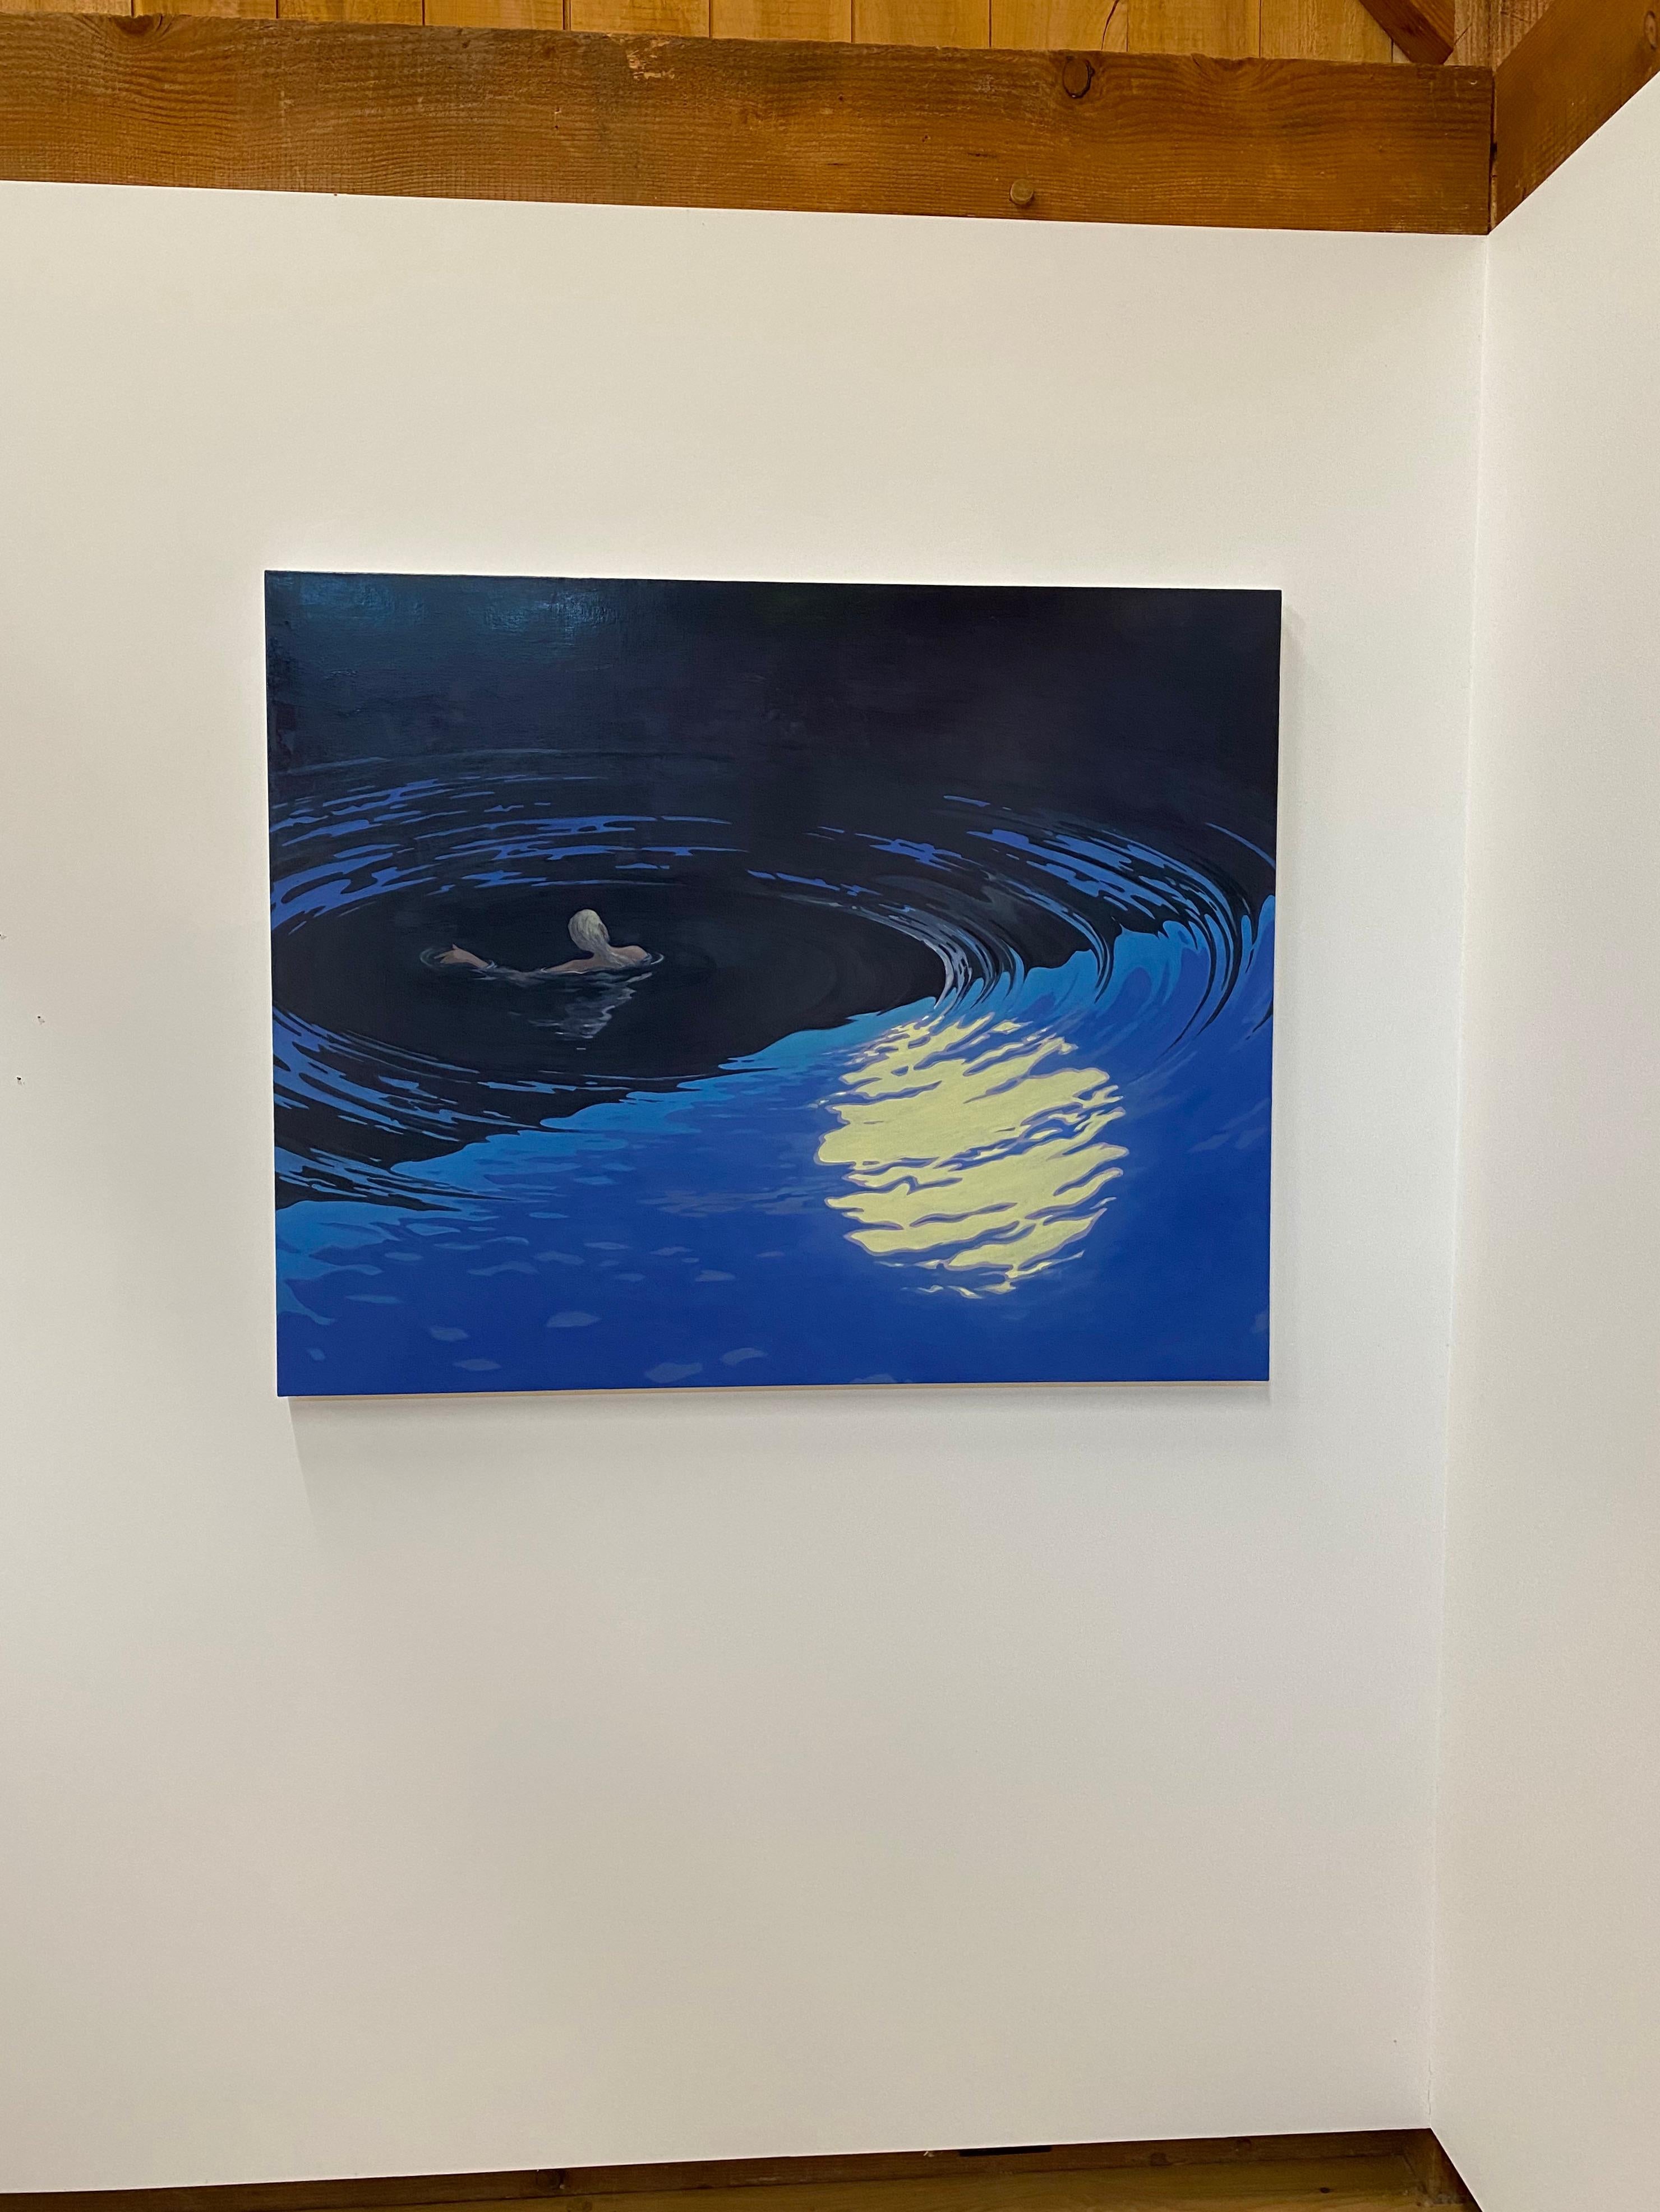 Floating, Night Landscape, Figure Swimming in Blue Water, Moonlight - Painting by KK Kozik